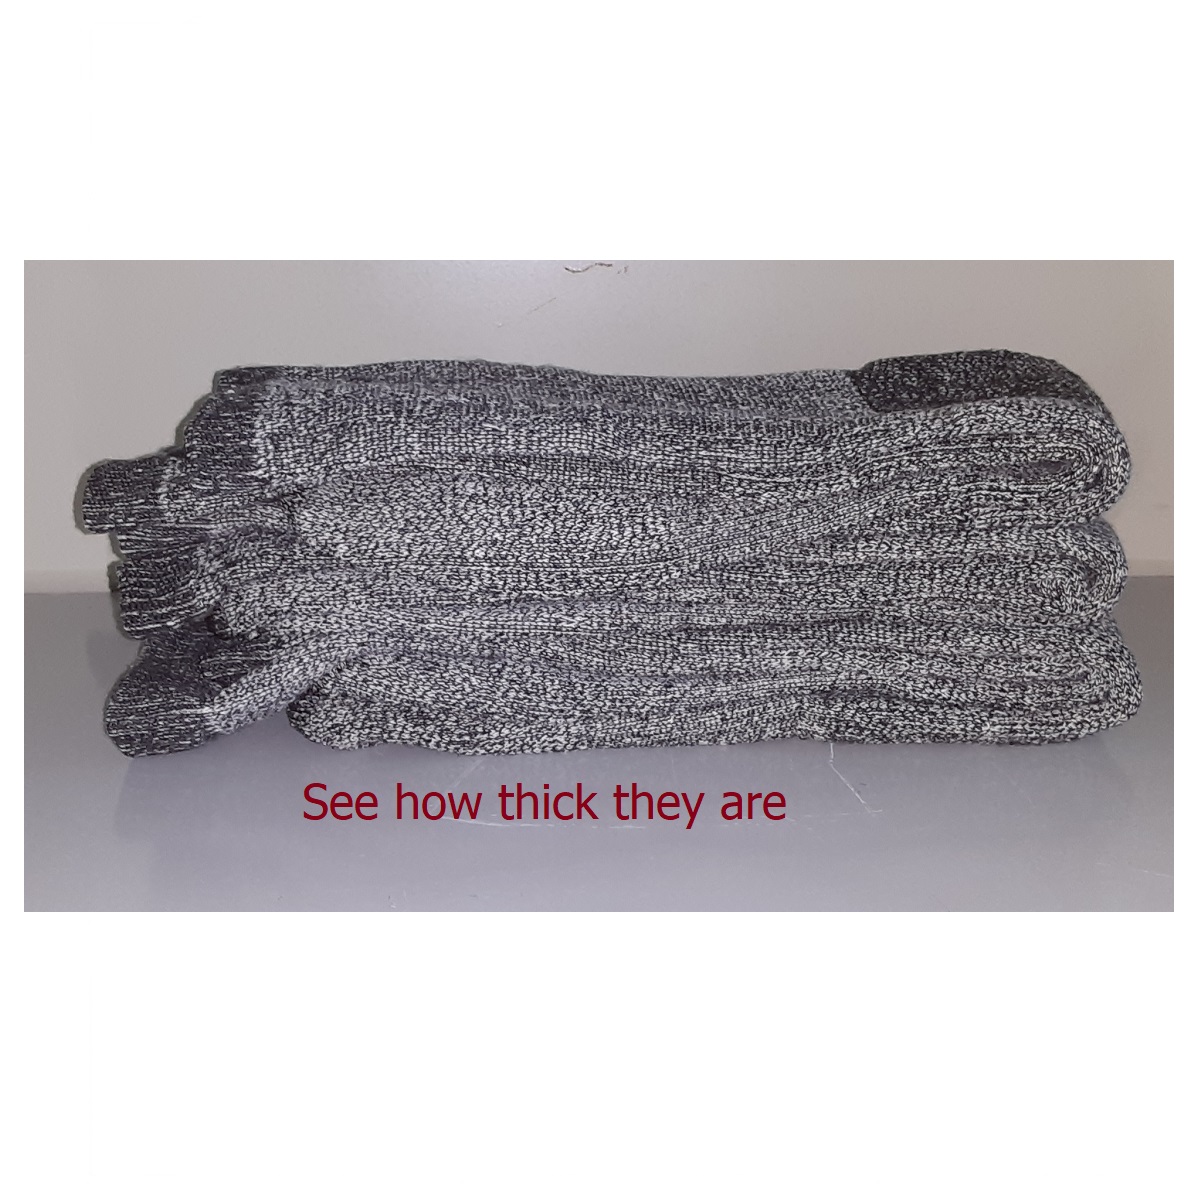 Thick Merino wool socks - Black and Gray - Premium Quality Woolen Socks